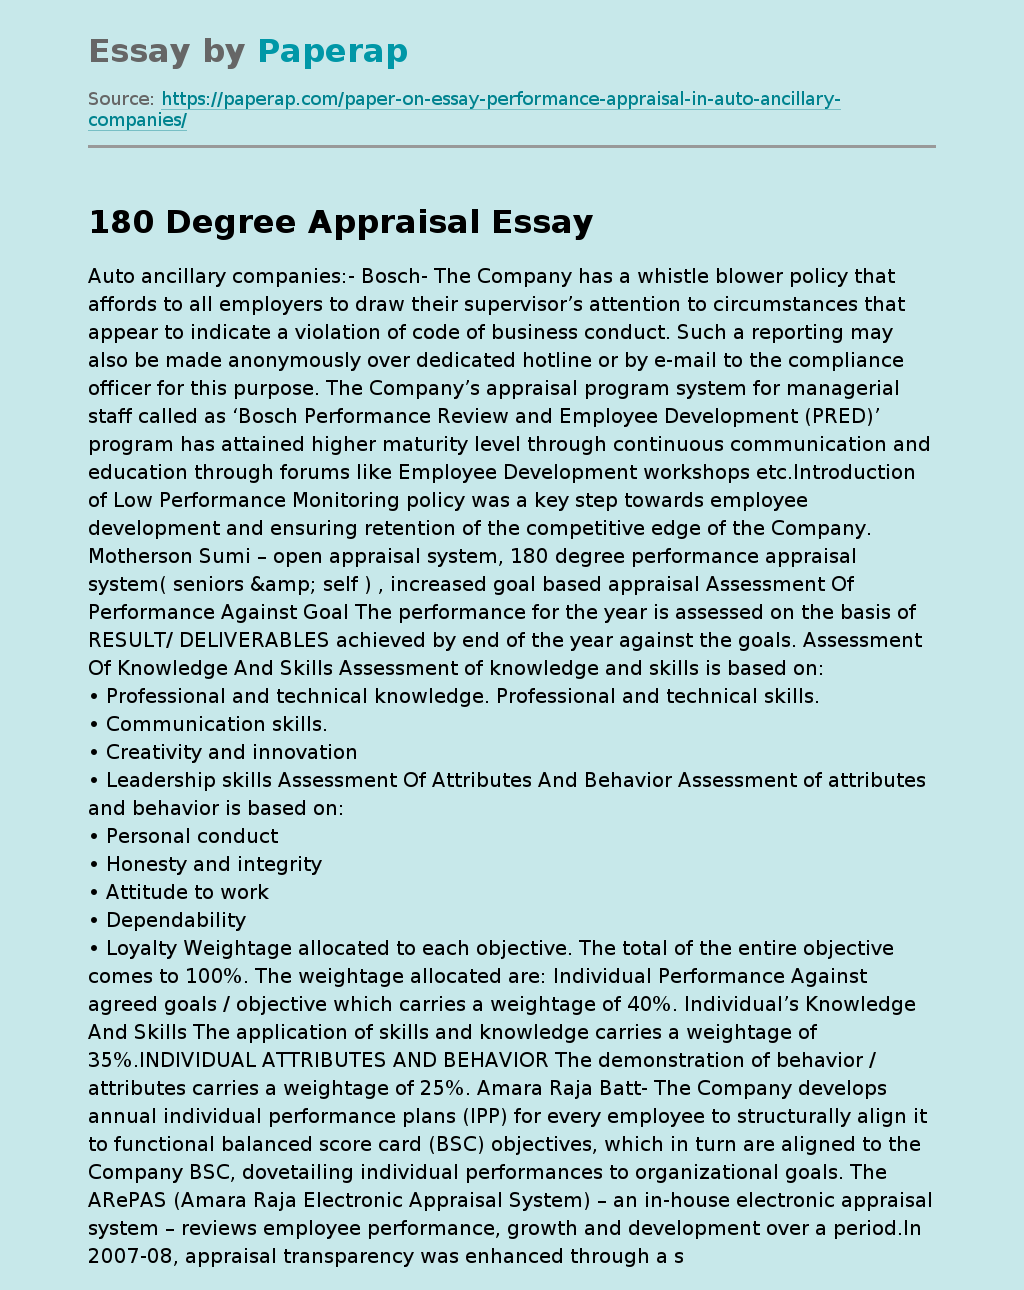 180 Degree Appraisal